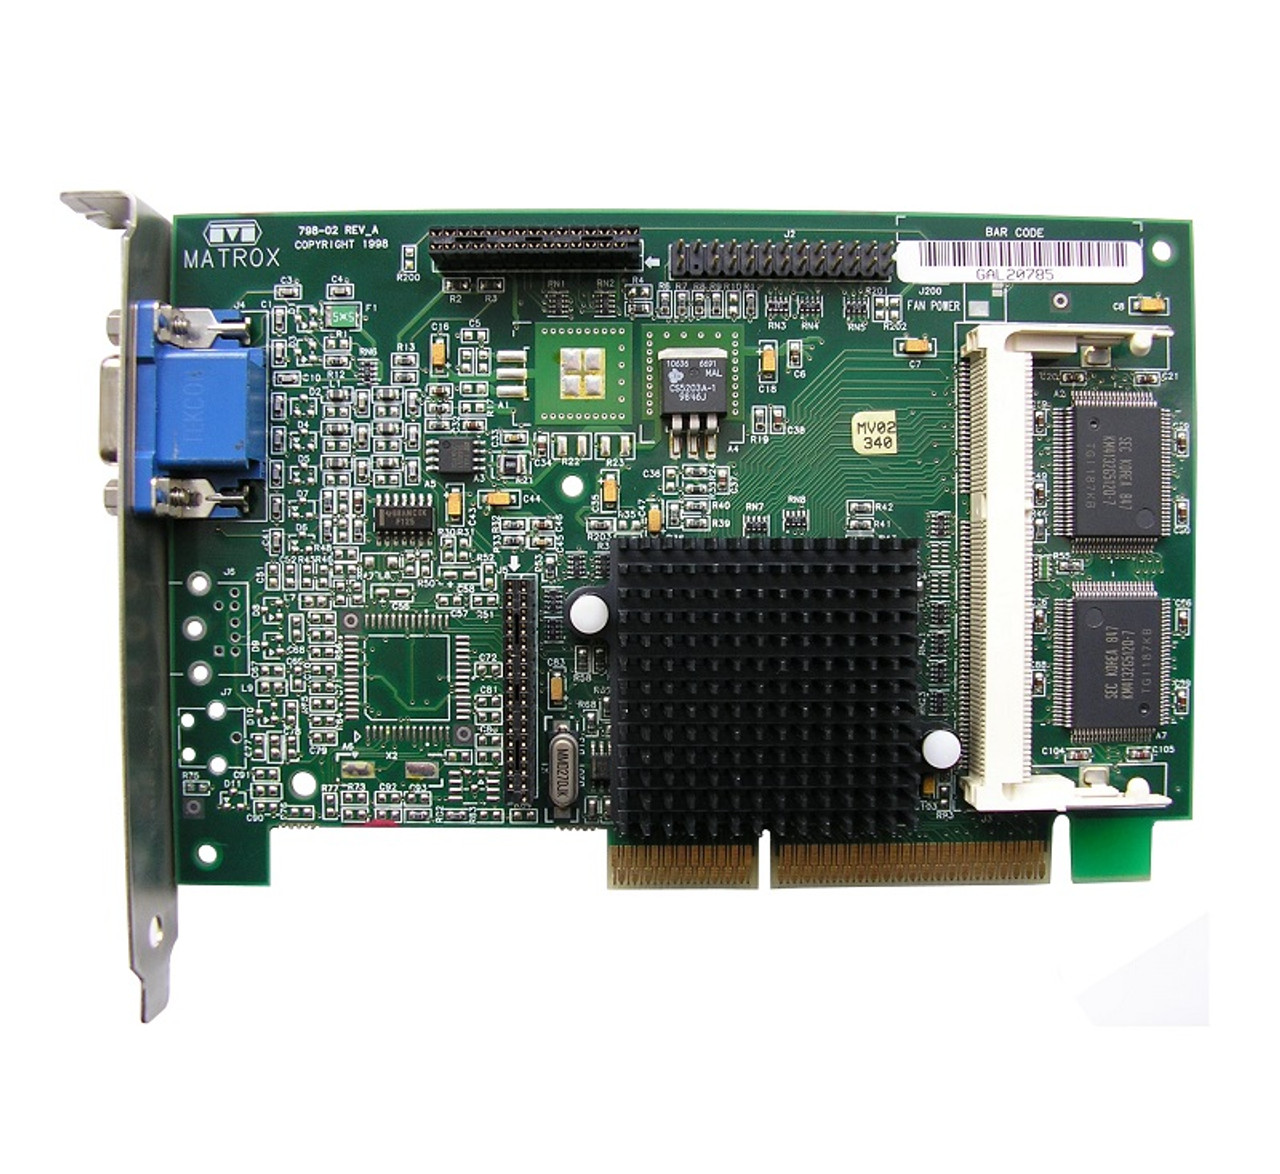 D7518A - HP Matrox G450 AGP Dual Video Graphics Card